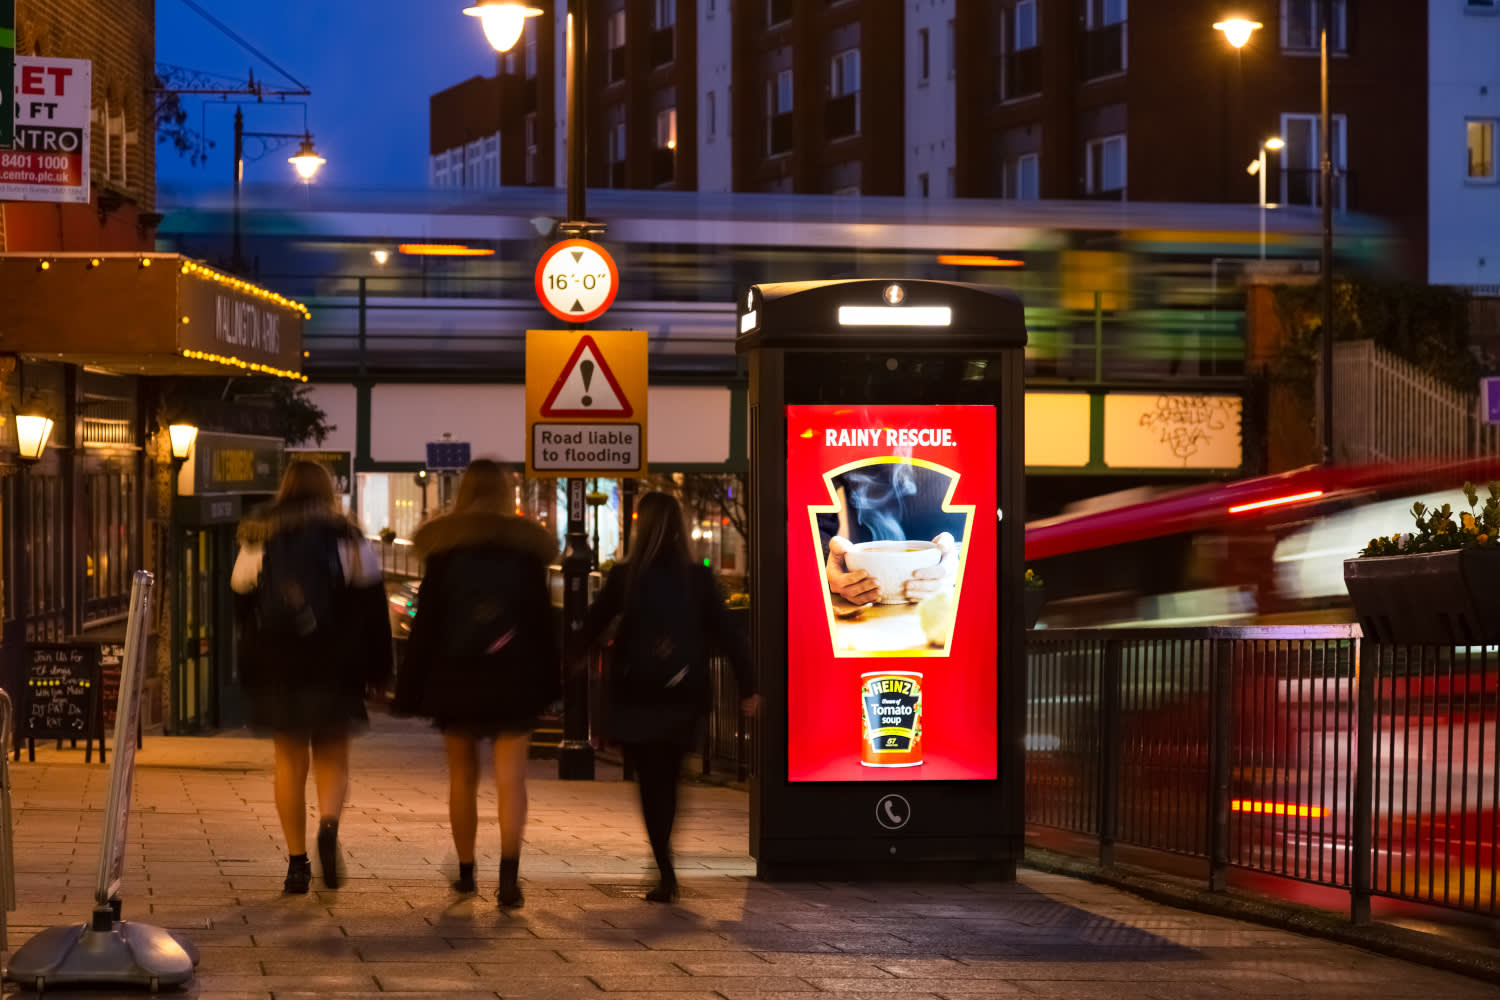 Digital phone box screen at night showing Heinz ad